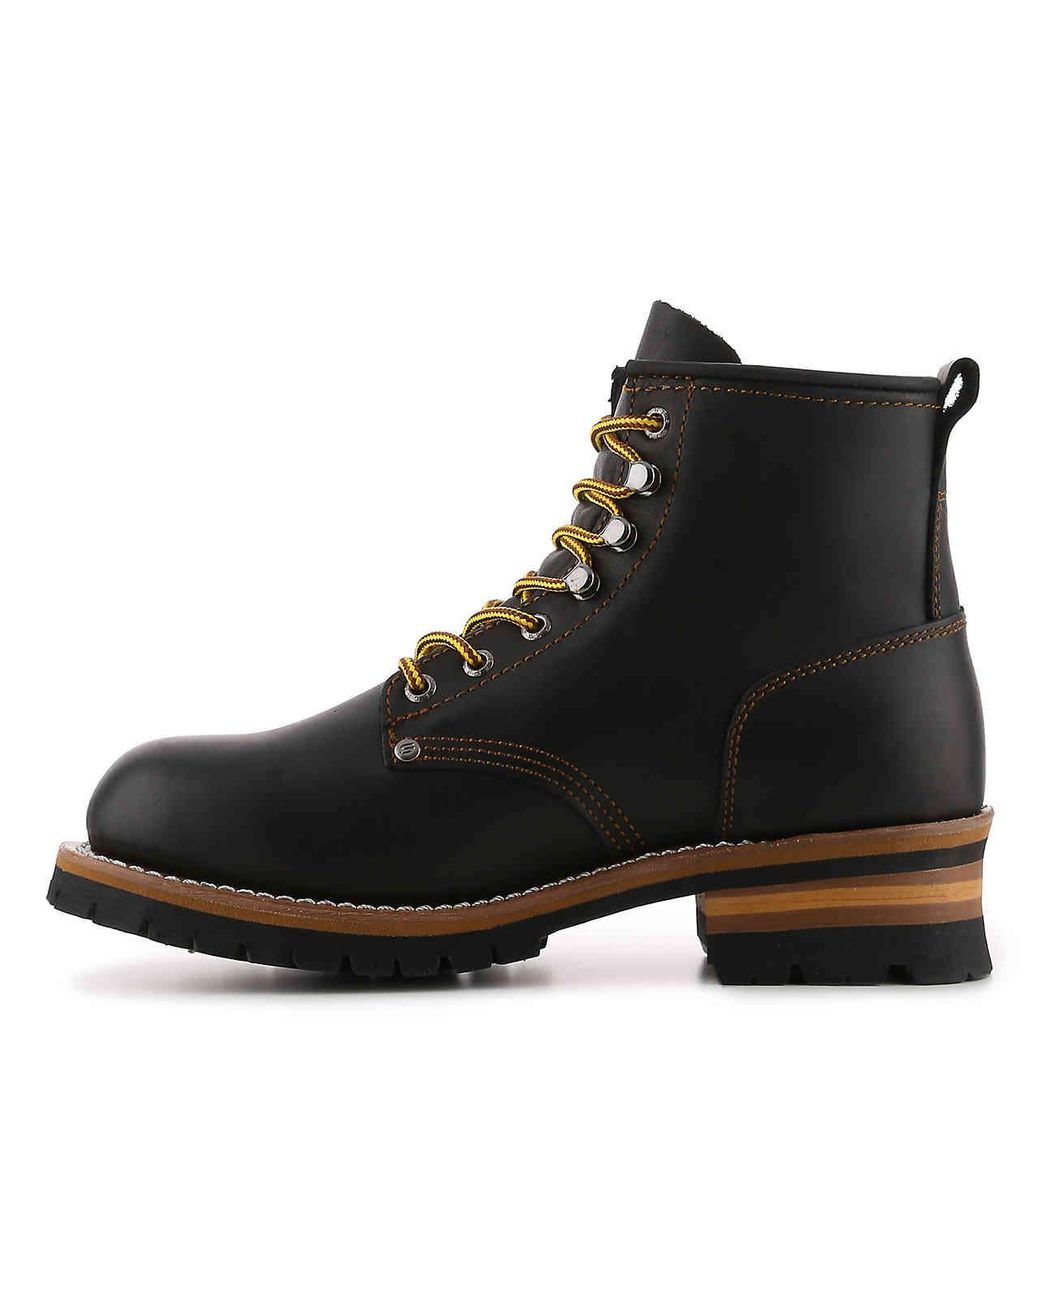 Skechers Leather Cascade Boot in Black 